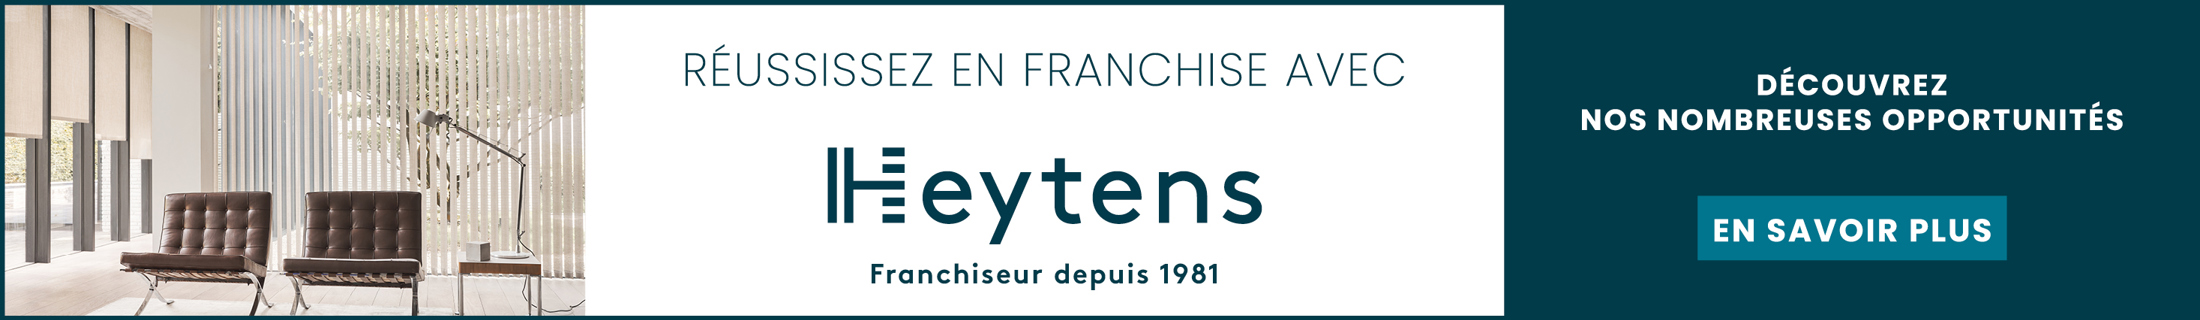 Heytens Website Banner FR